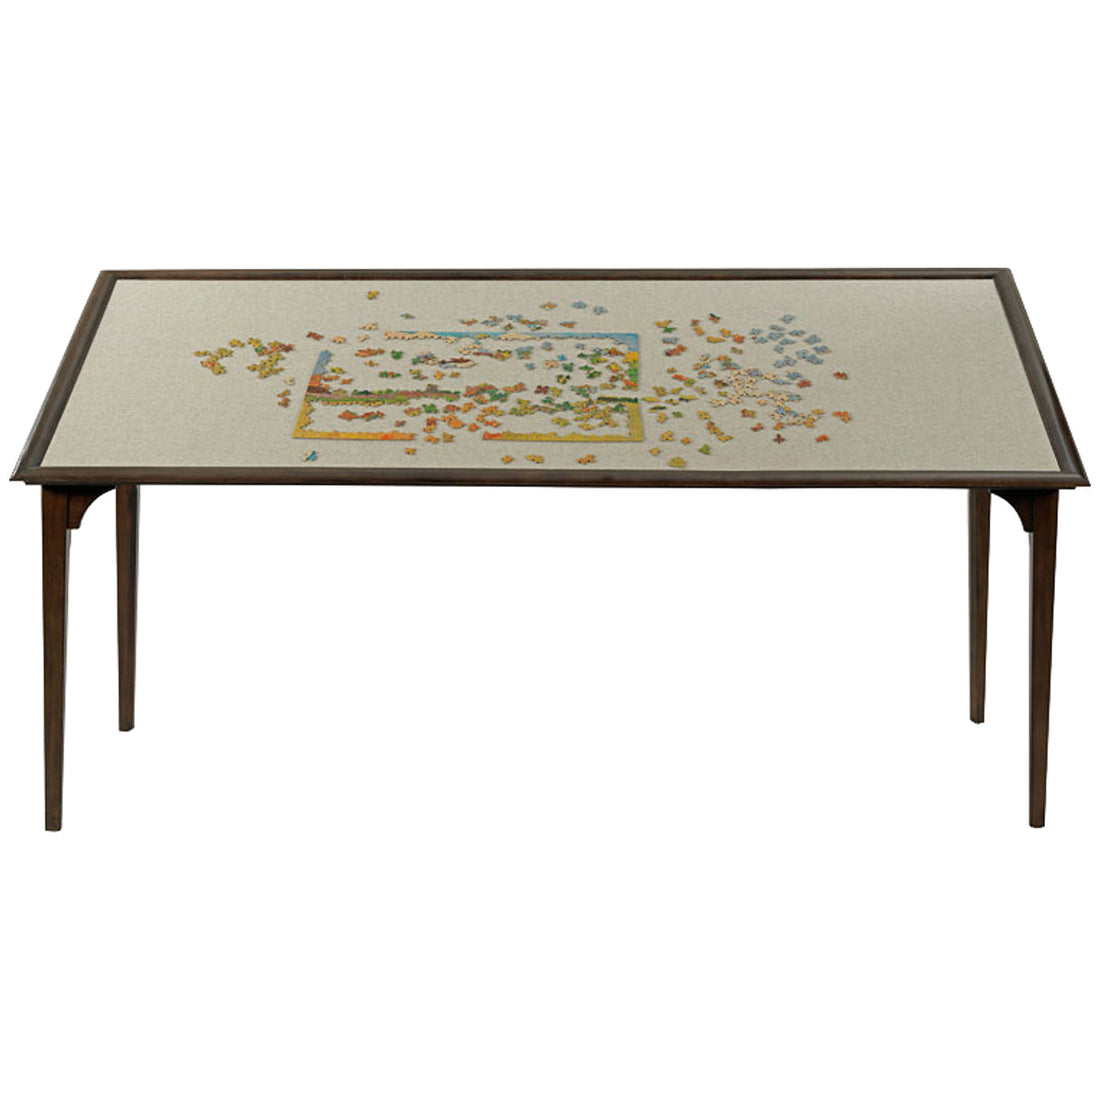 Woodbridge Furniture Borum Puzzle Table